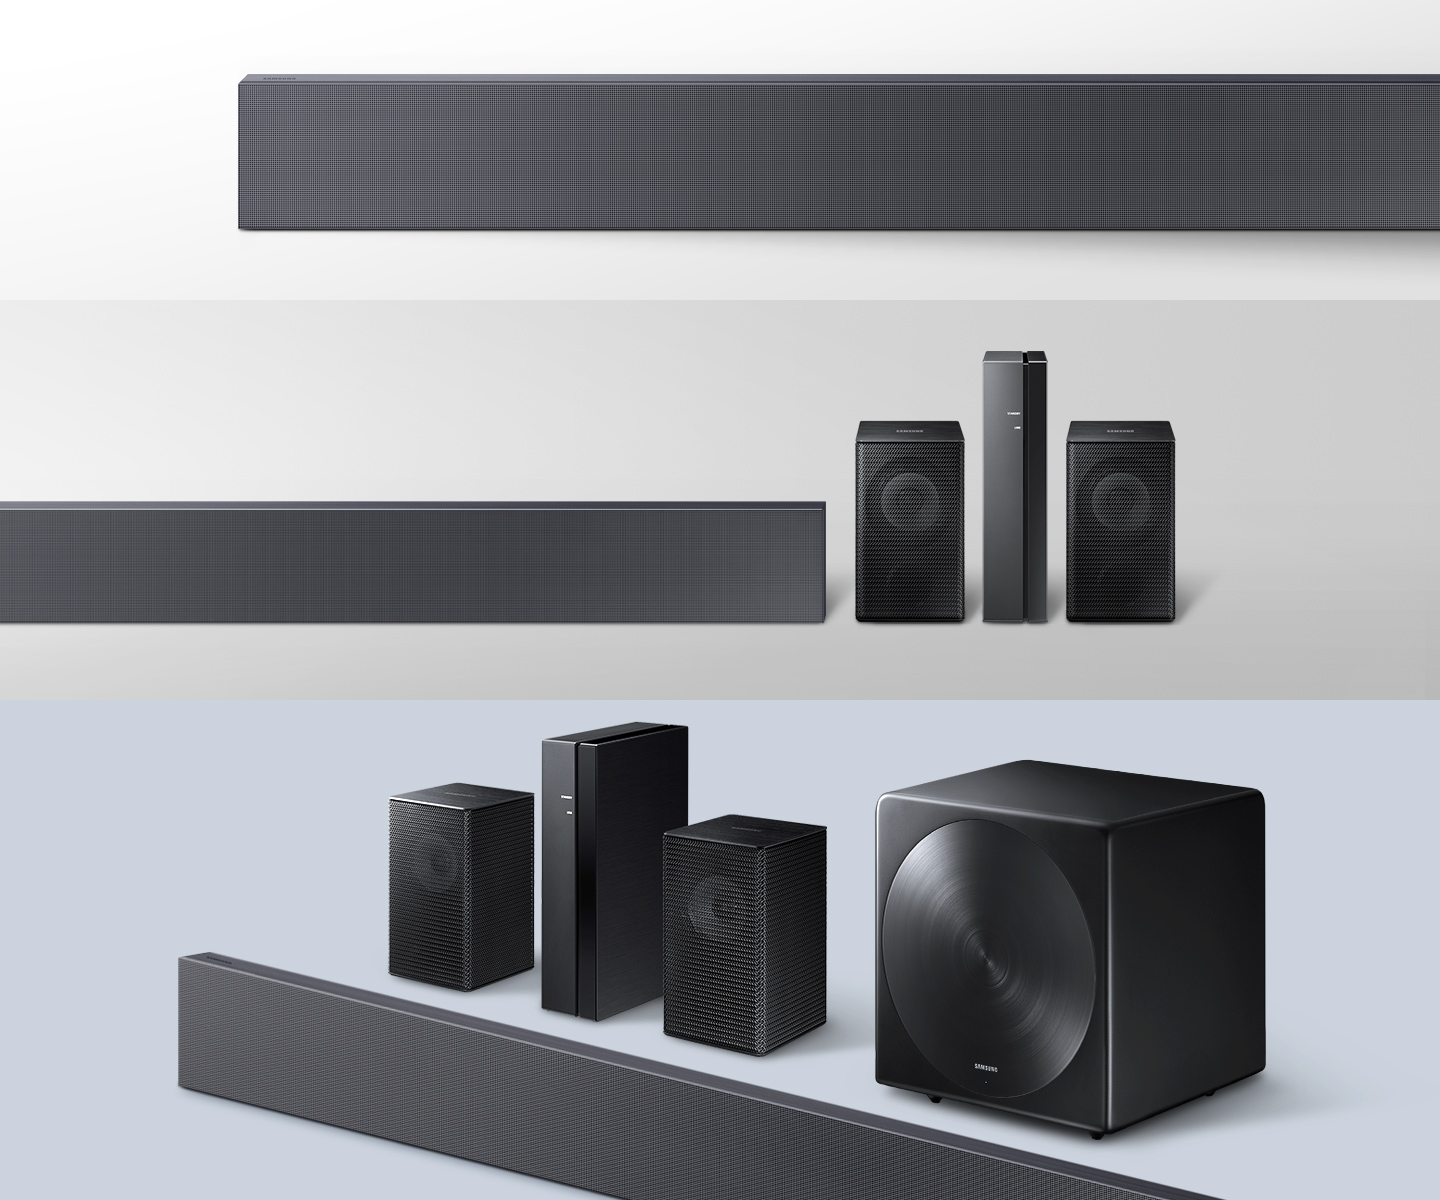 HW-NW700 Sound+ Slim Soundbar & Home Theater Accessories - HW- | Samsung US